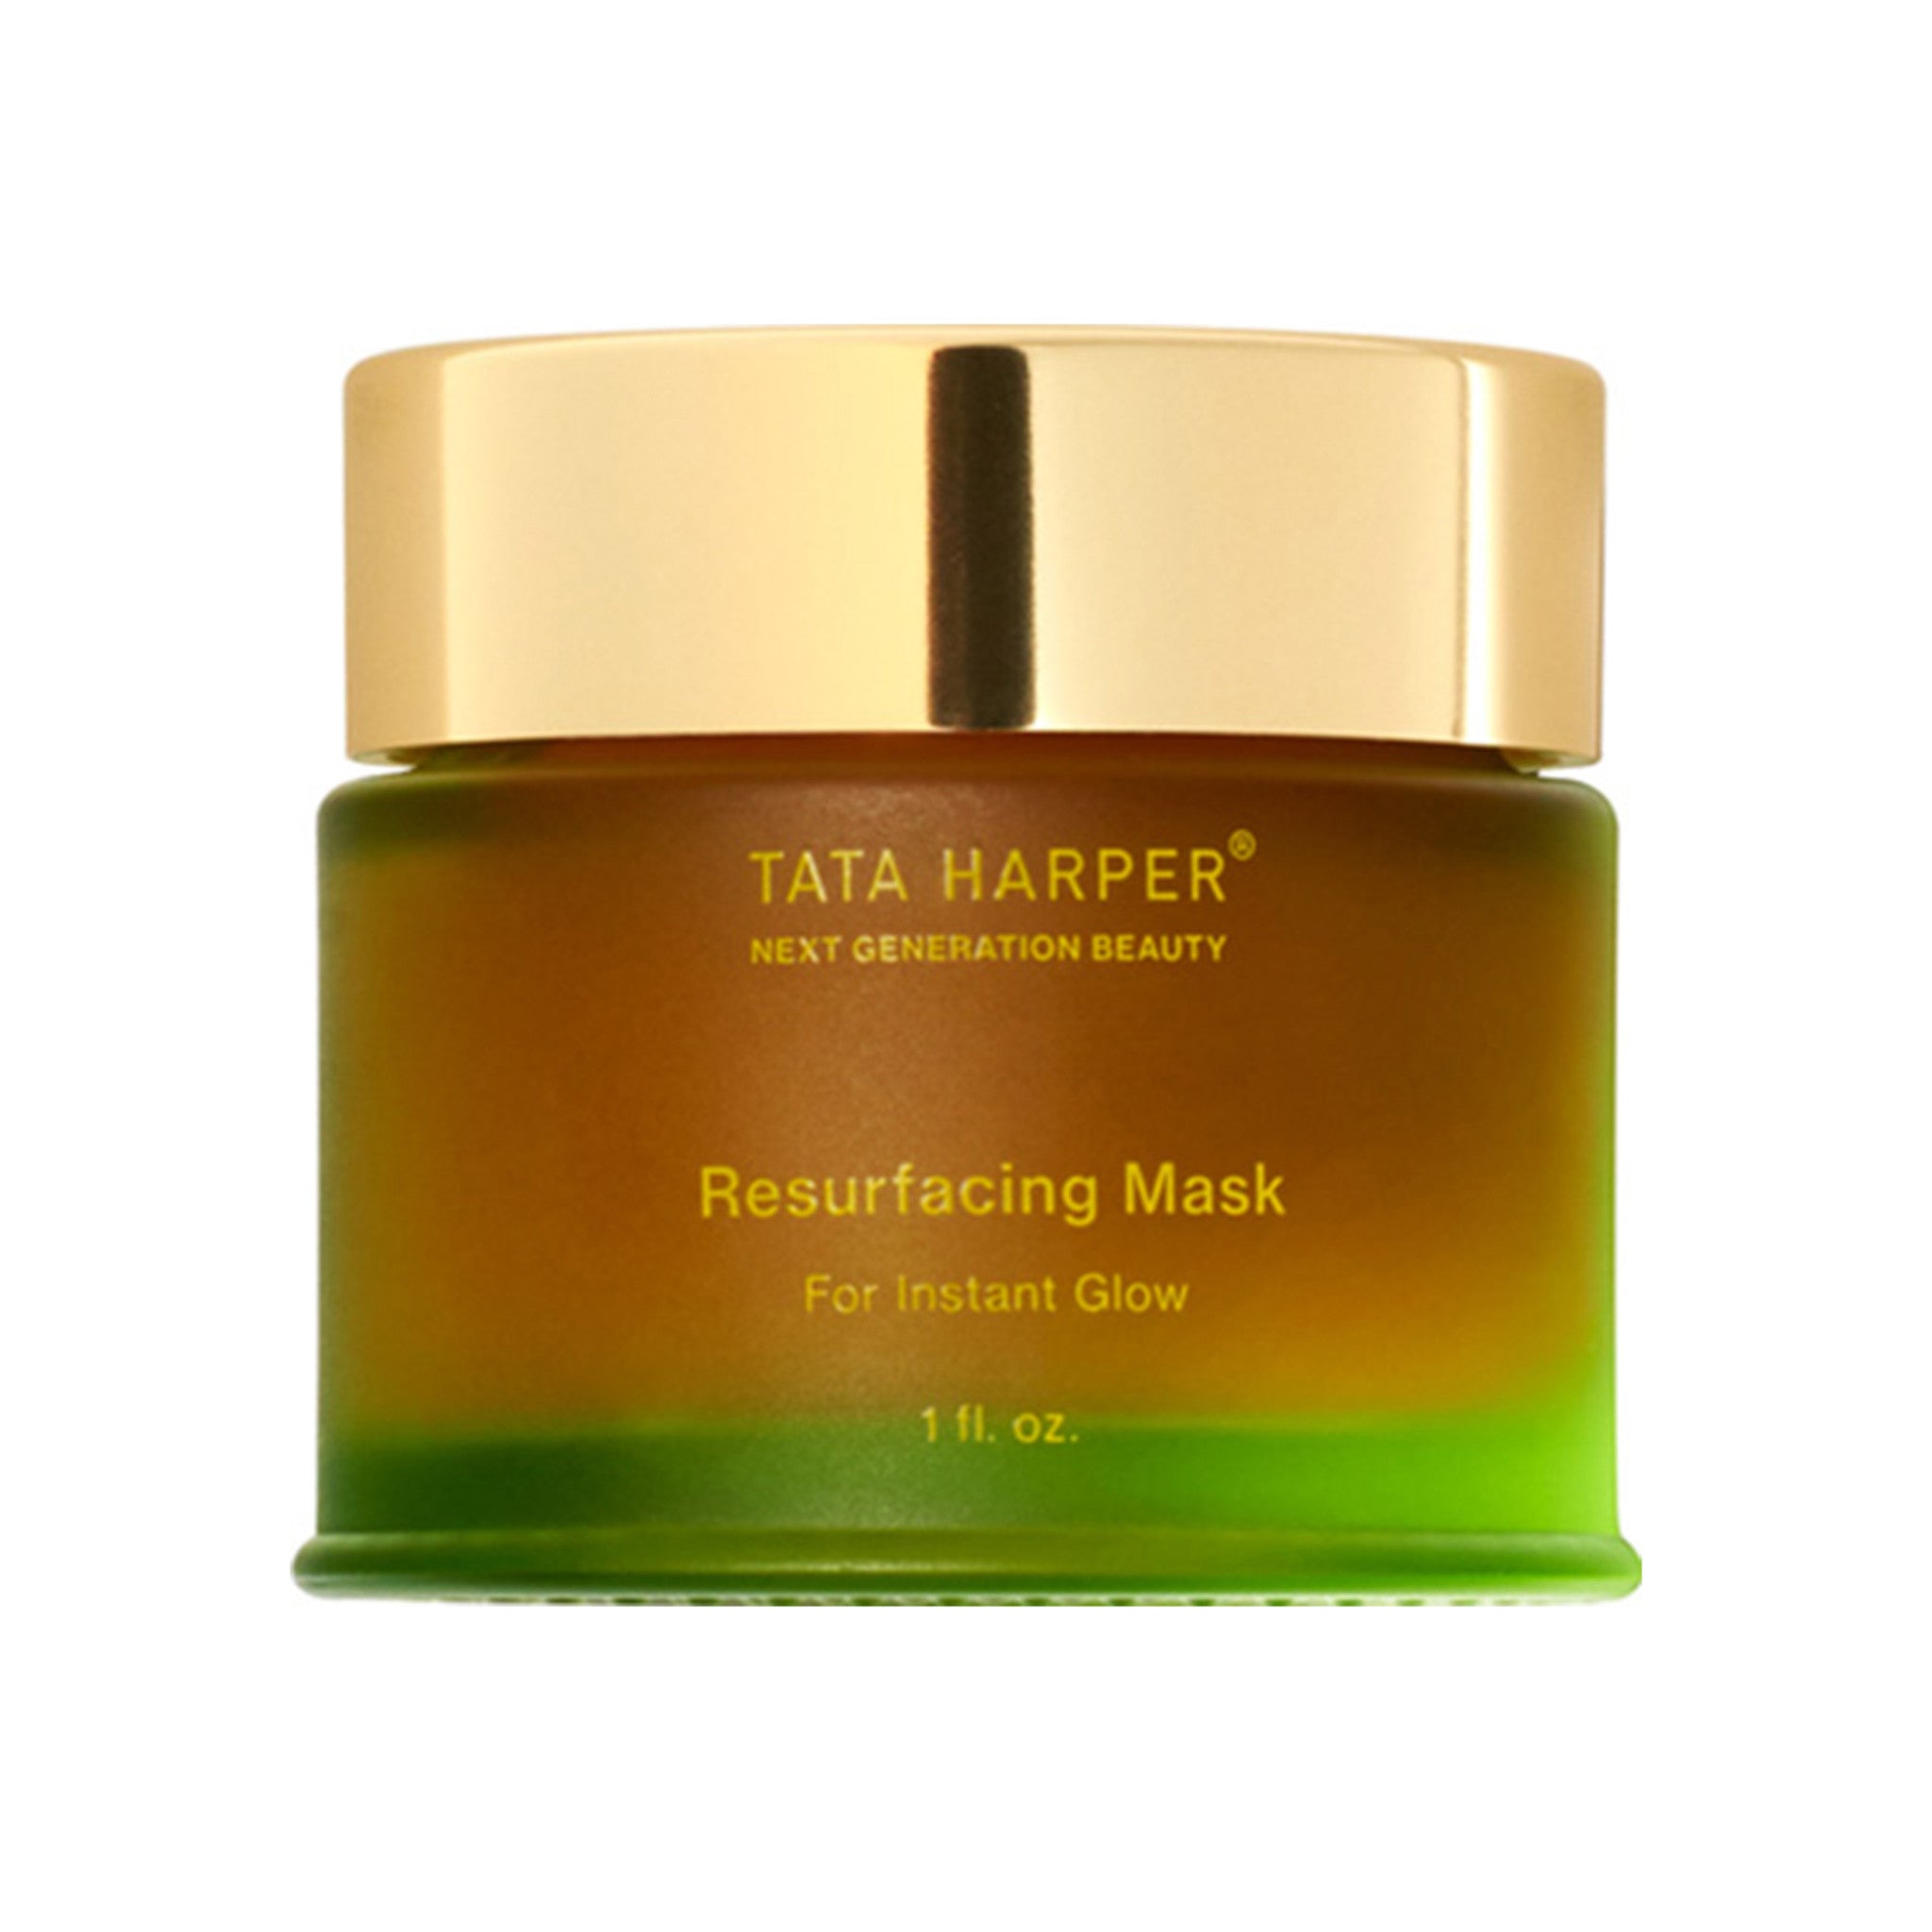 Tata Harper Resurfacing Mask main image.